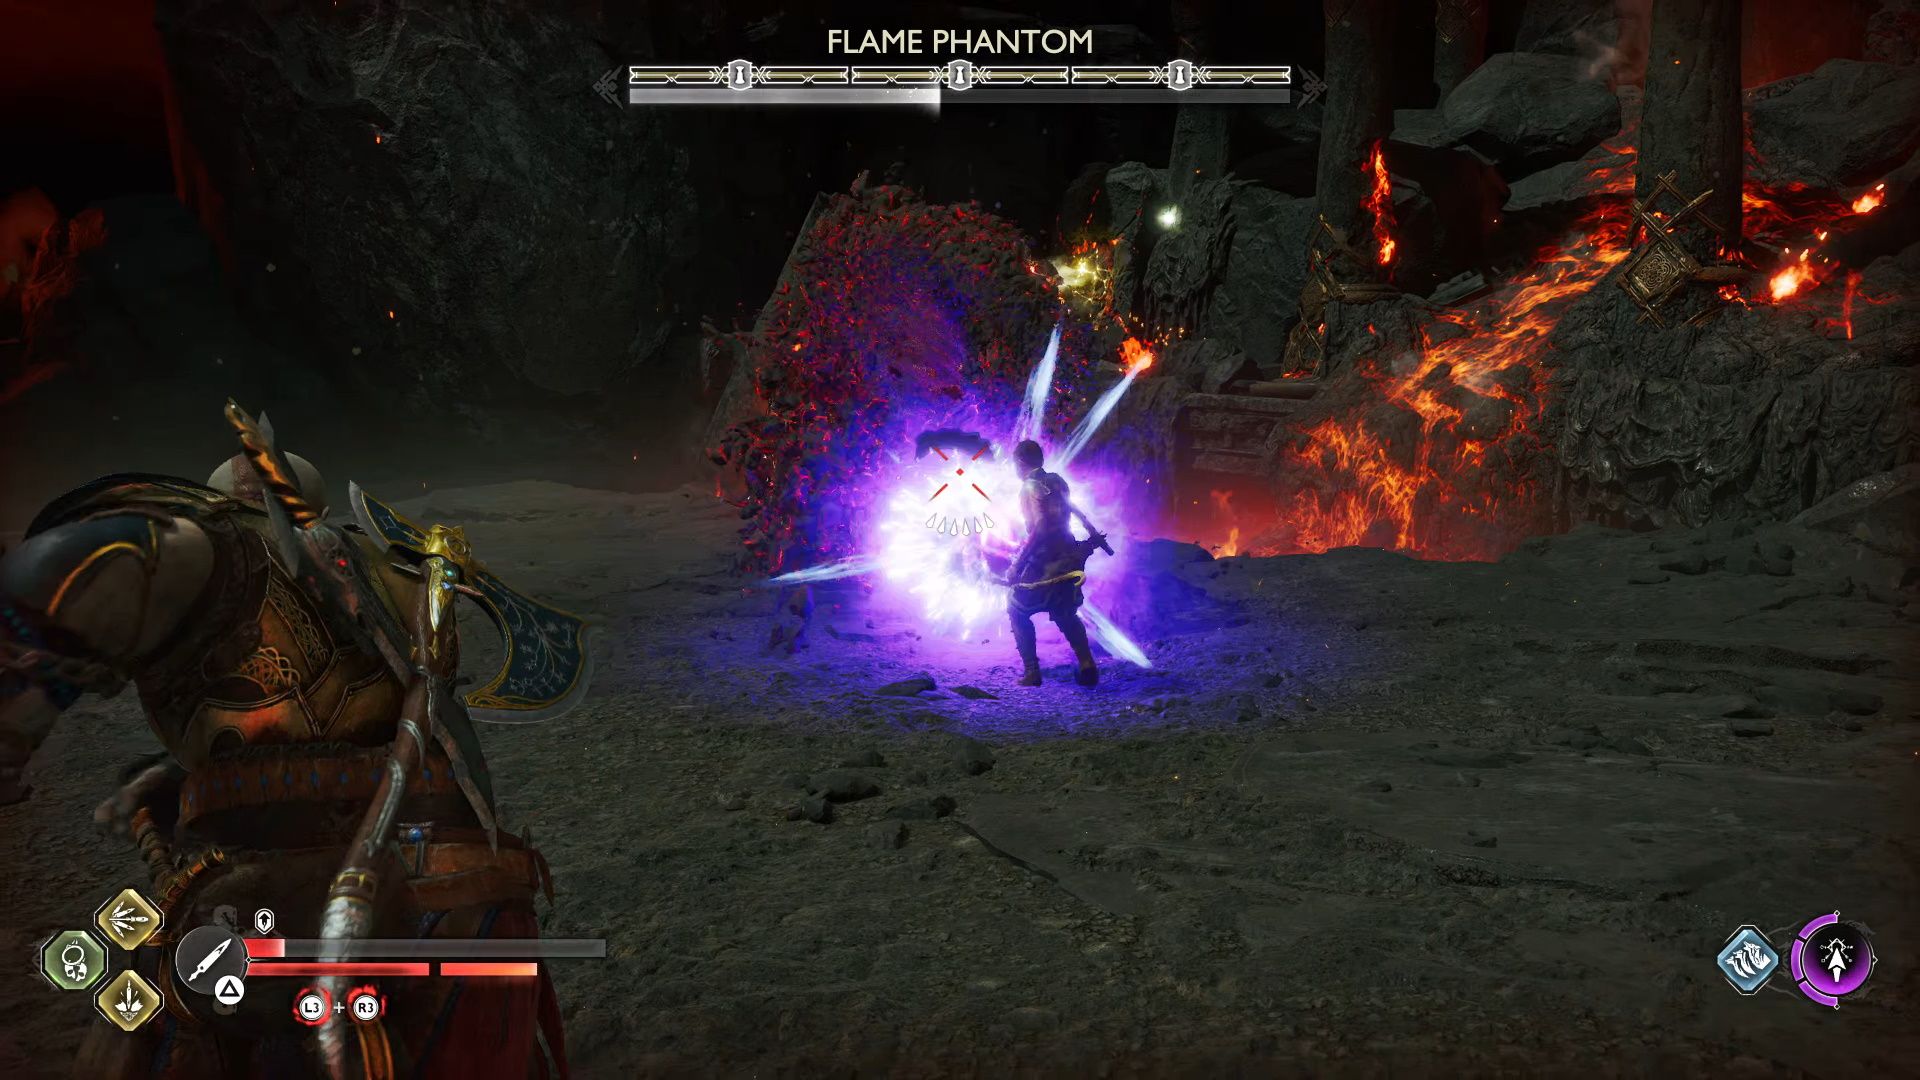 God Of War Ragnarok, The Summoning, Hitting The Flame Phantom's Orb While It Glows